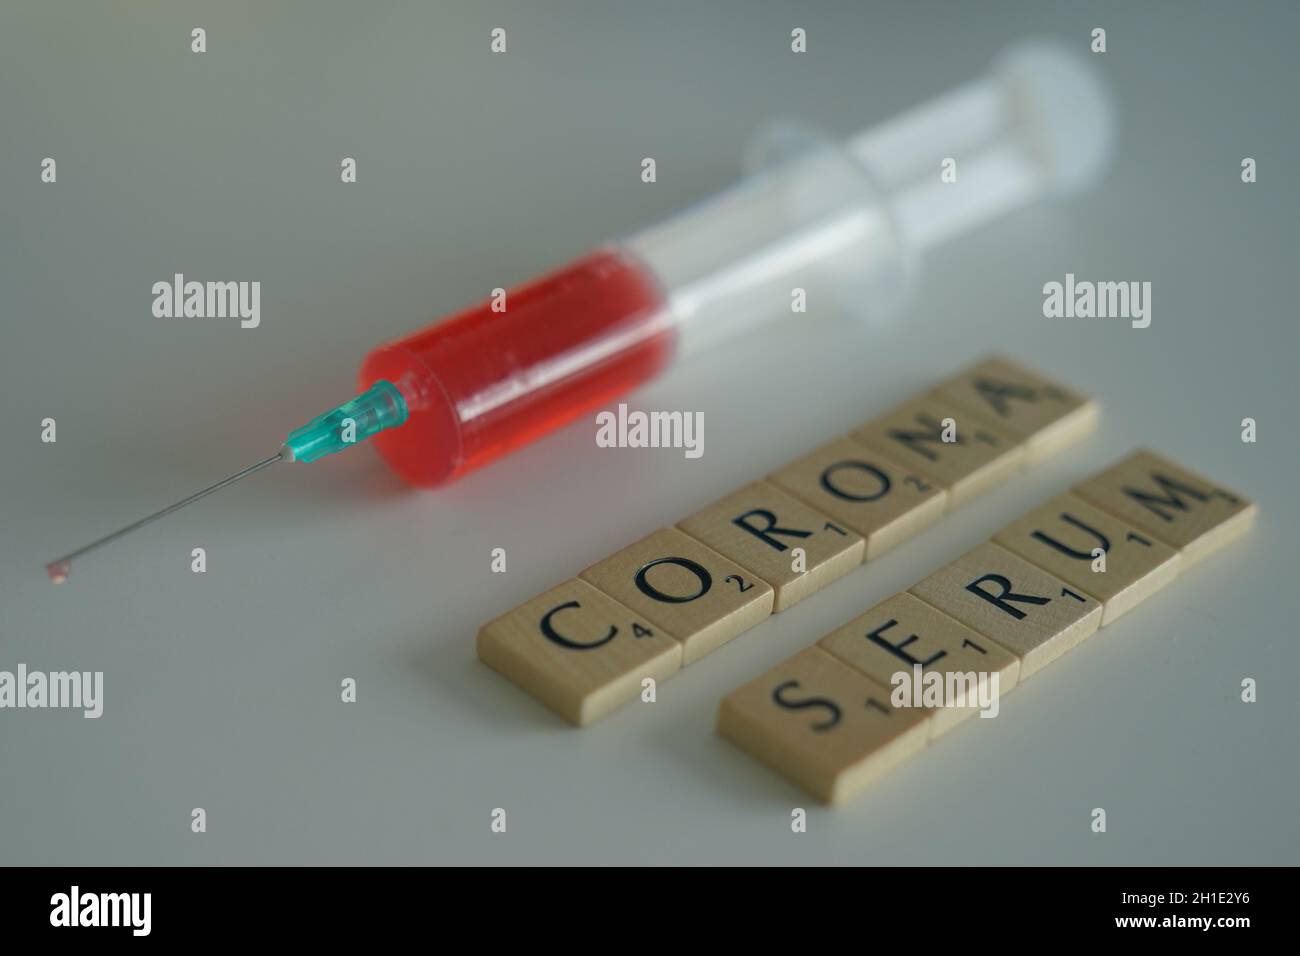 Symbolfoto, Symbolic Image ; Symbol picture of a syringe with a  Corona Serum to defend the global corona virus and crises. Stock Photo